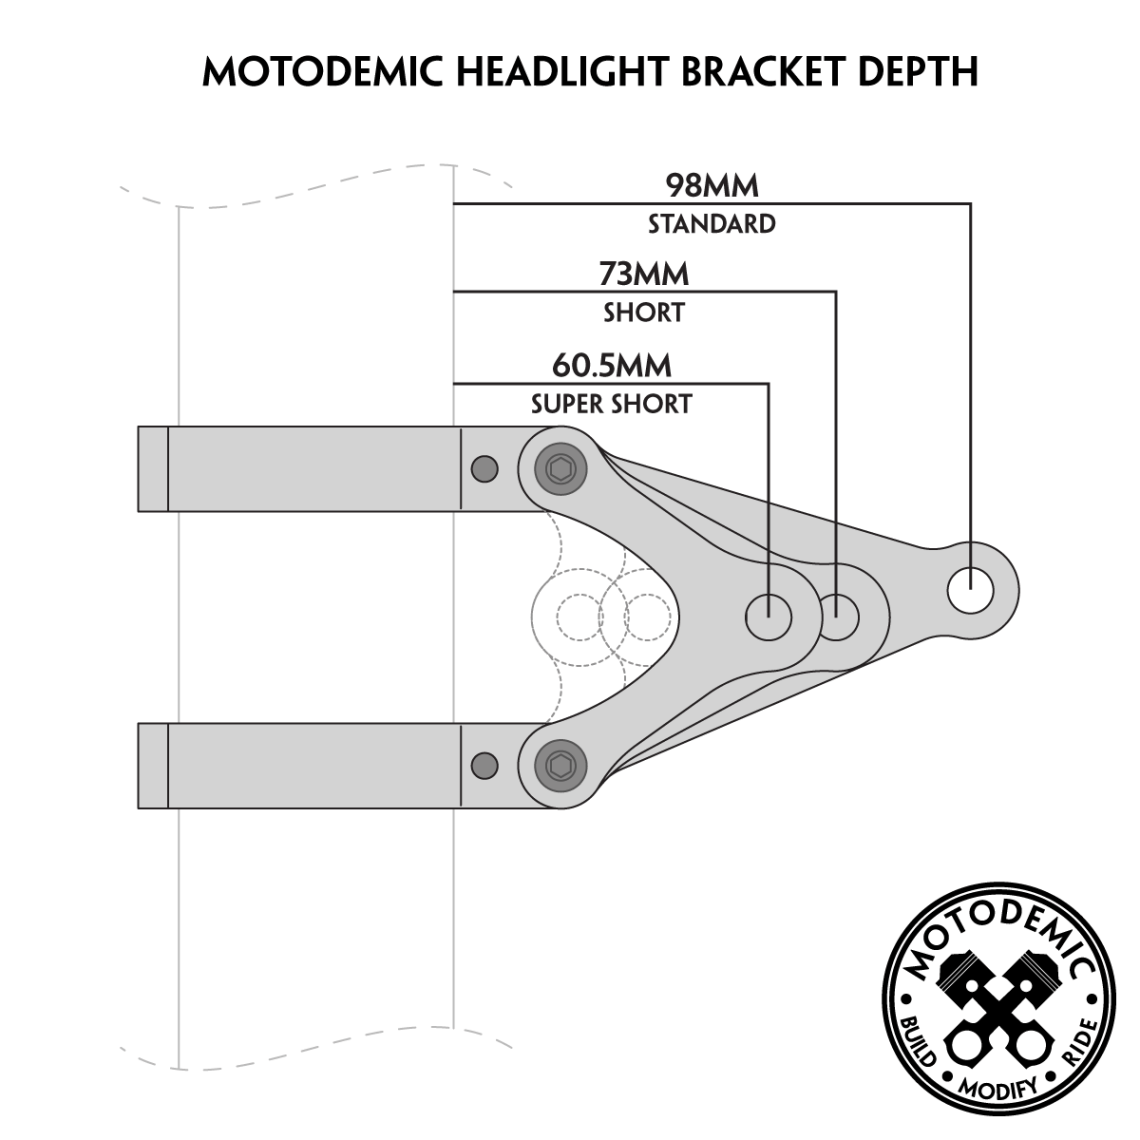 Configurable MOTODEMIC Headlight Brackets